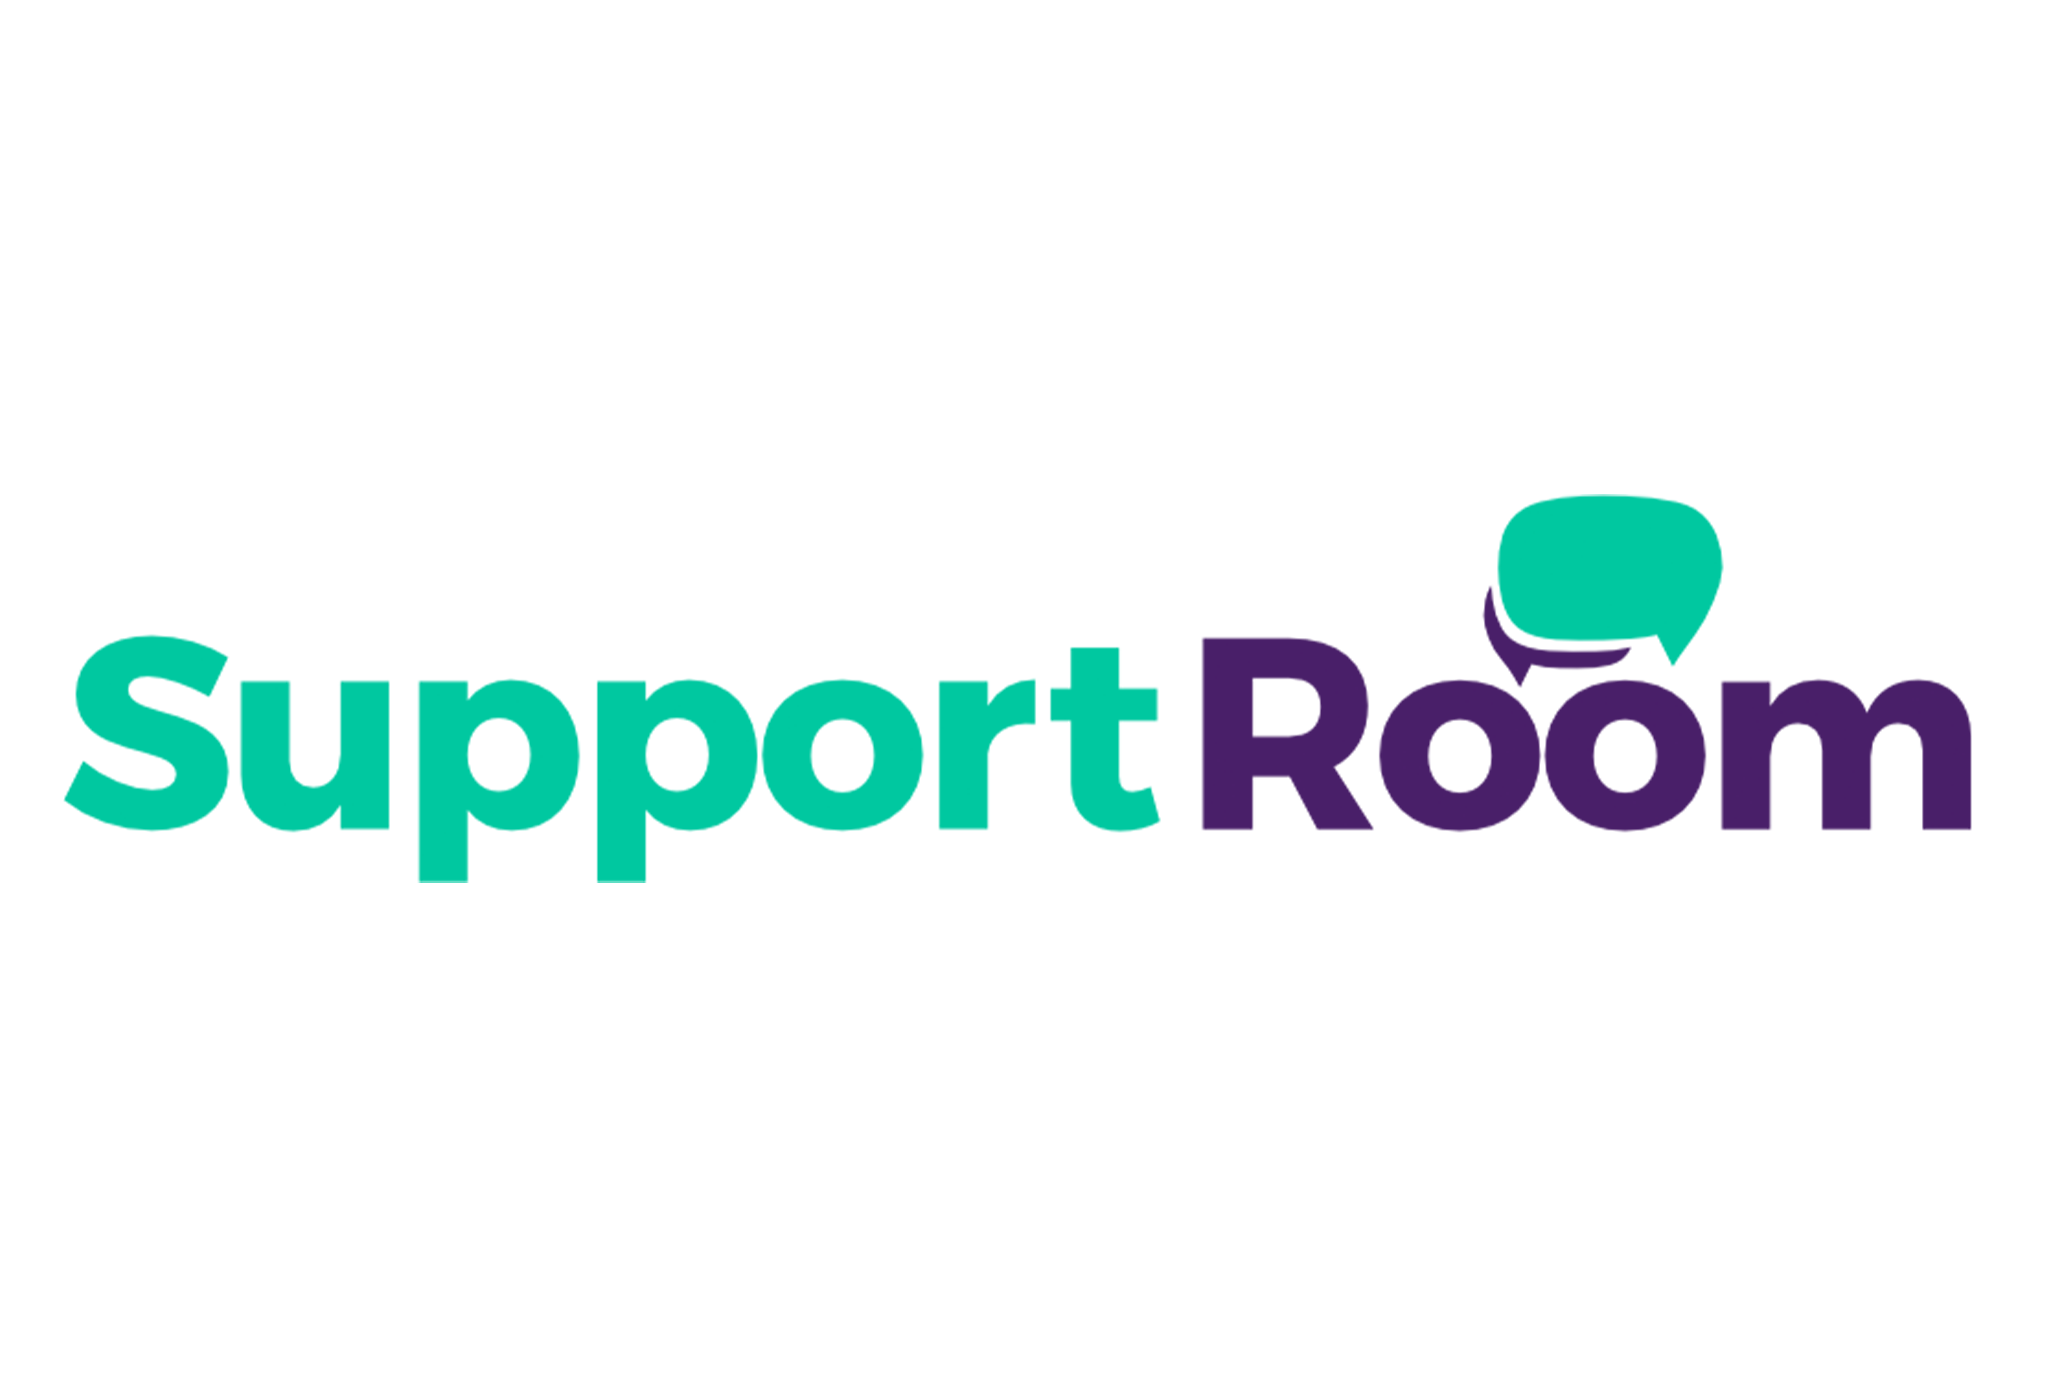 Support Room logo